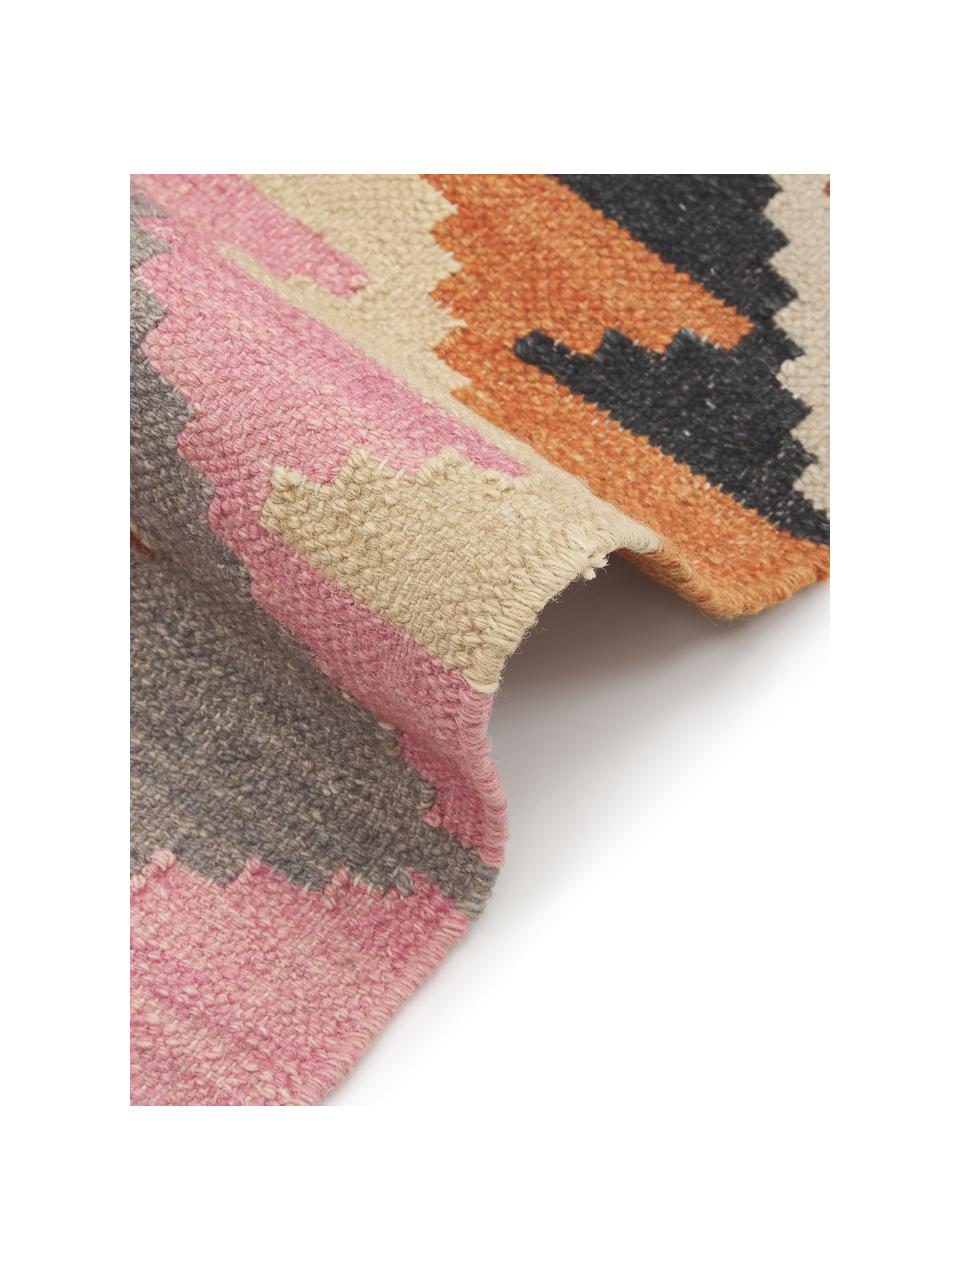 Alfombra alfombra artesanal kilim de lana Zenda, 100% lana, Multicolor, An 120 x L 180 cm (Tamaño S)